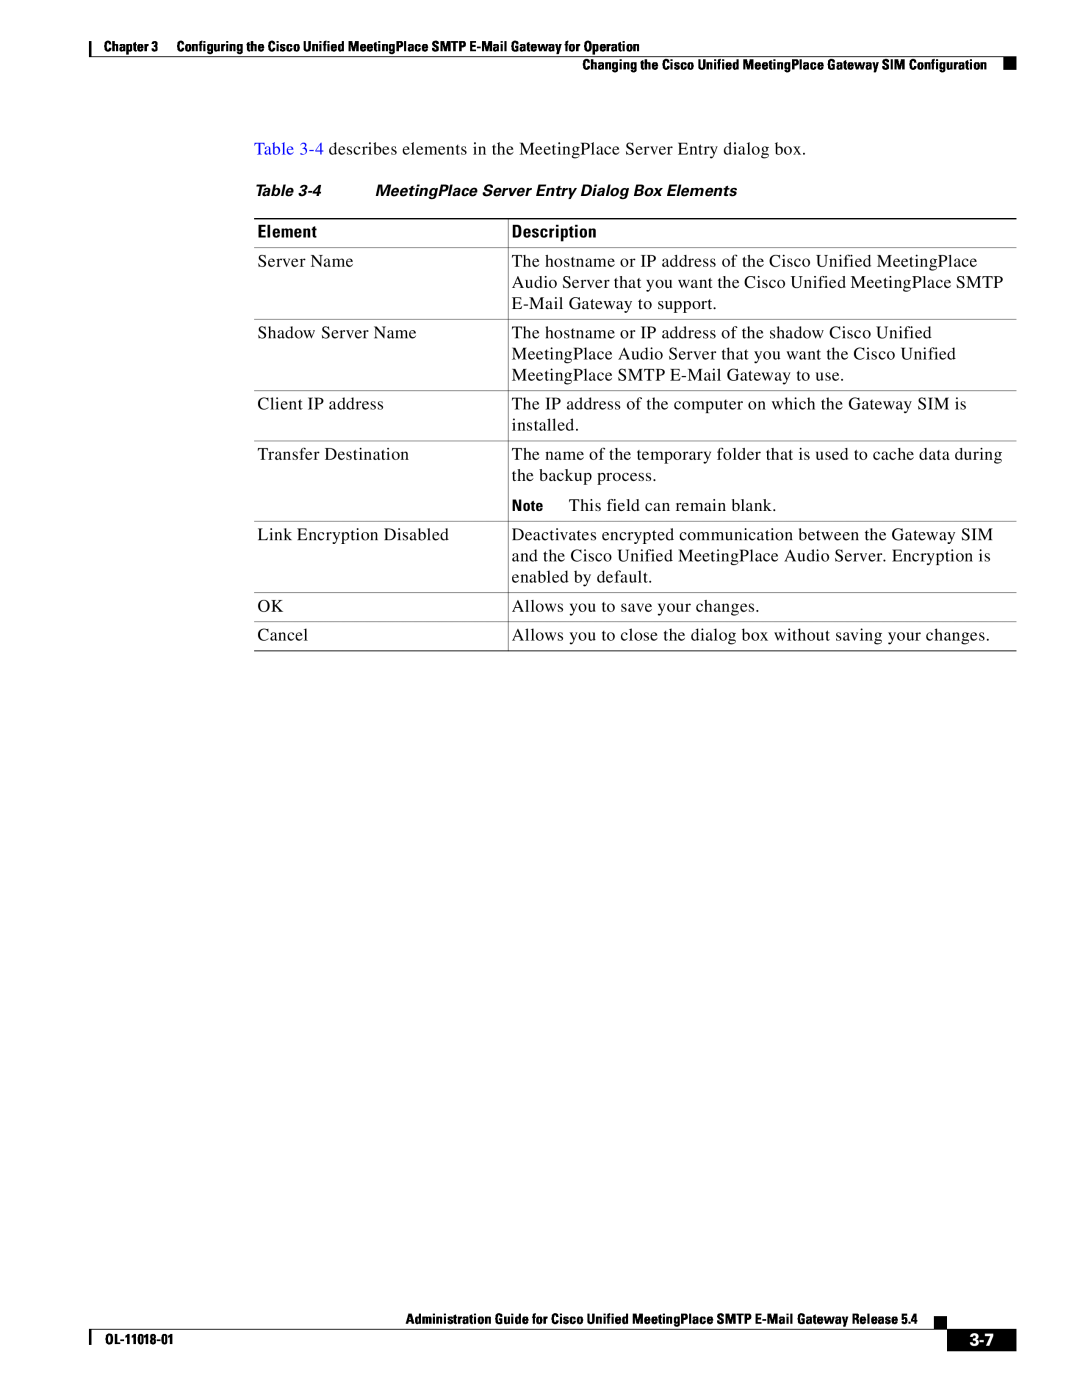 Cisco Systems SMTP manual Element, Description, Server Name 